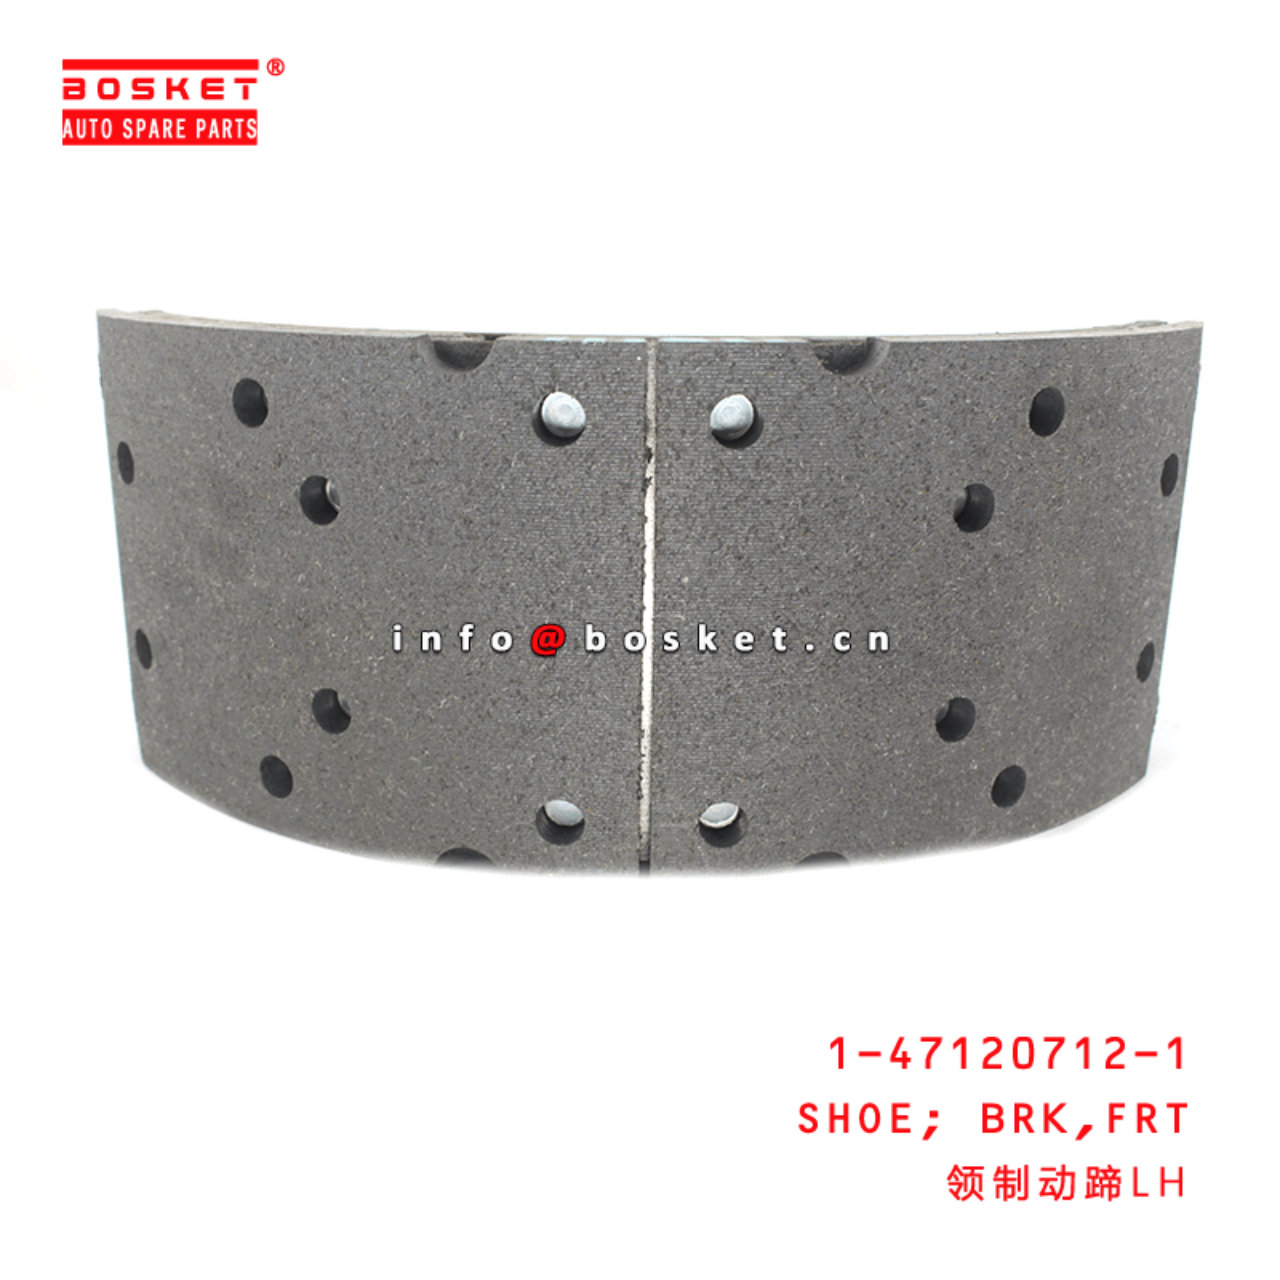 1-47120712-1 Front Brake Shoe 1471207121 Suitable for ISUZU FTR